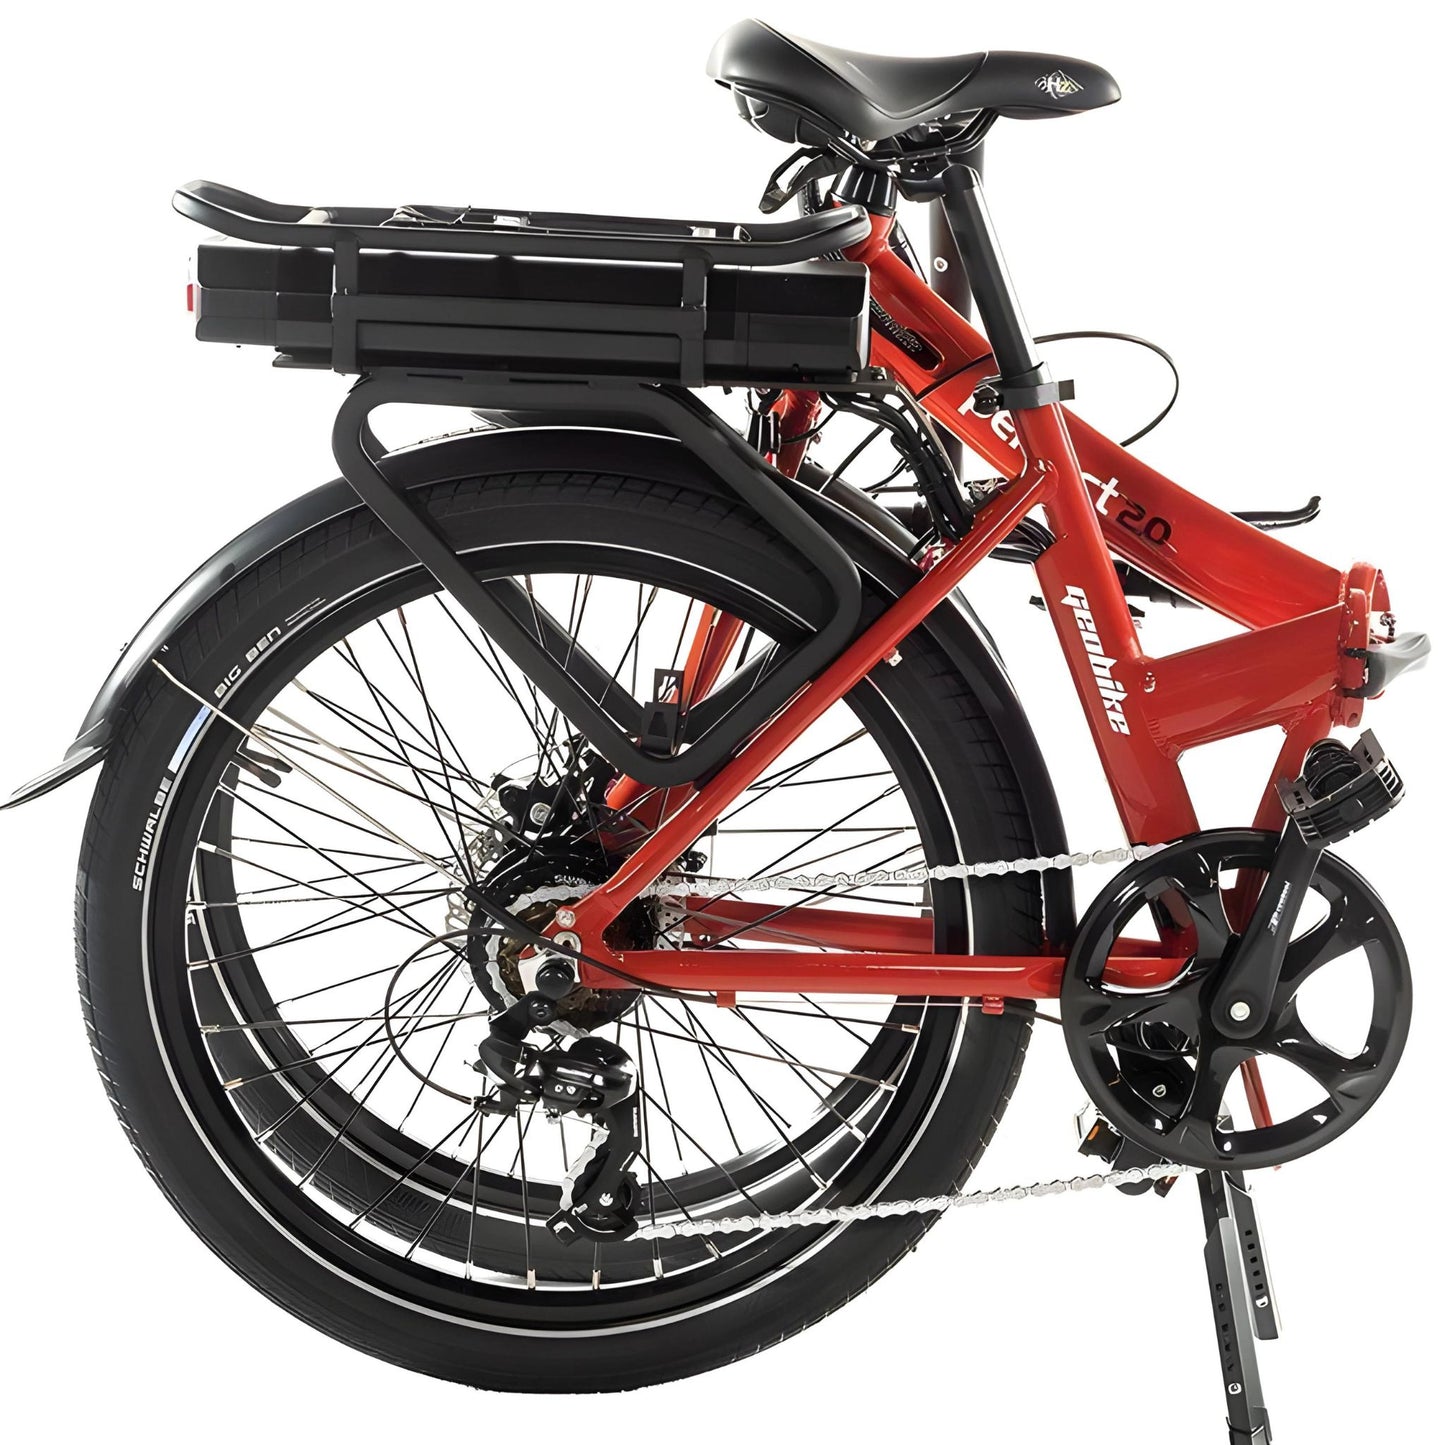 Red Geobike Perfect 2.0 folding e-bike in compact form